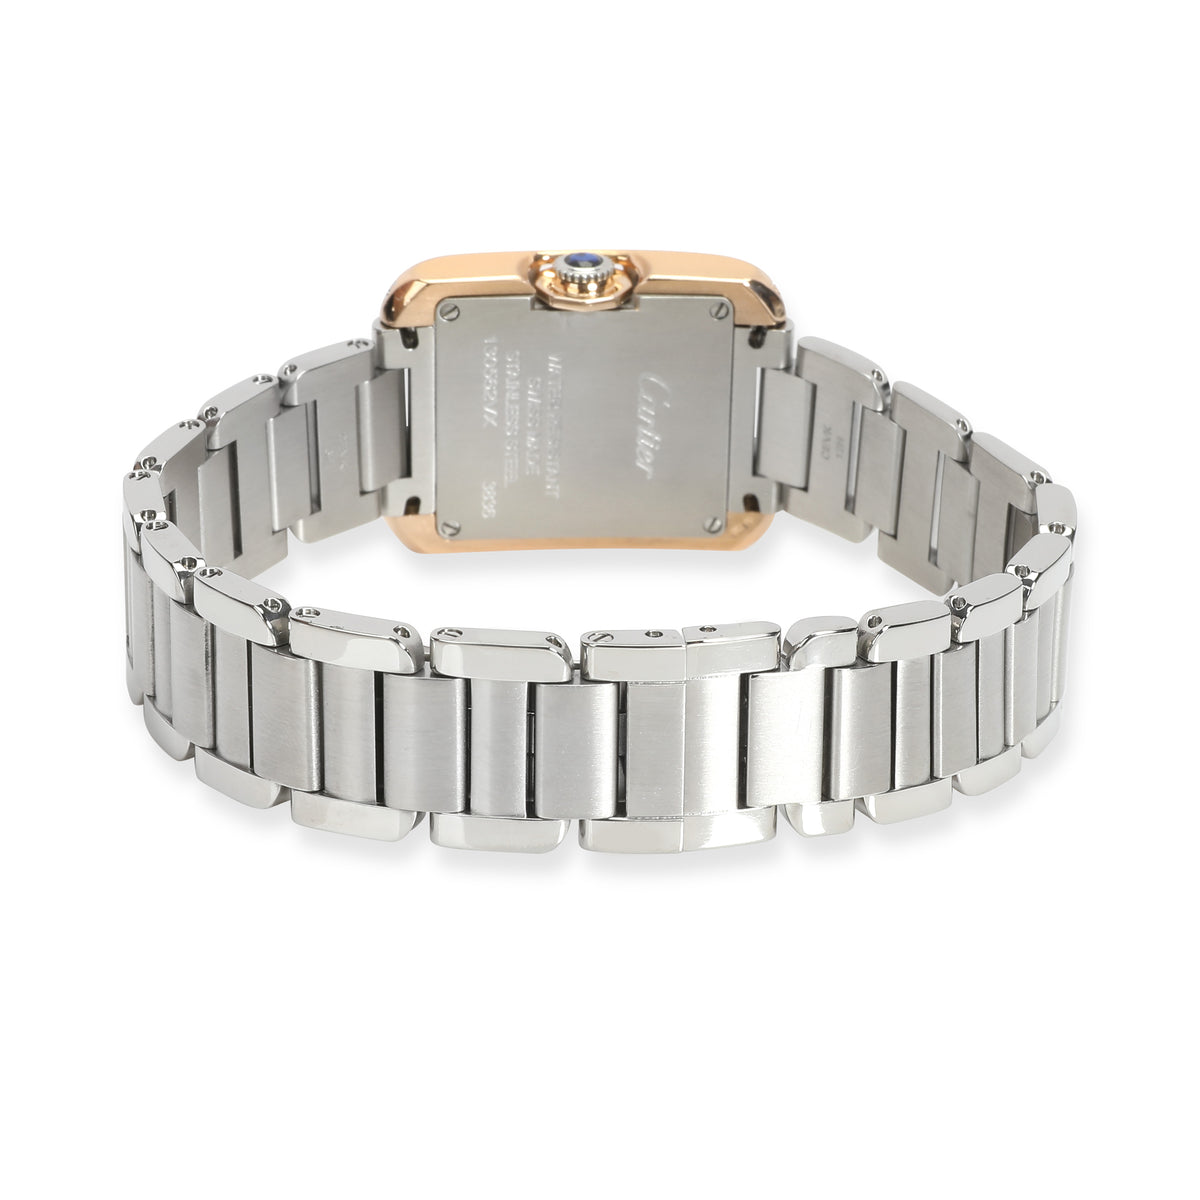 Cartier Tank Anglaise W3TA0002 Women's Watch in 18kt Yellow Gold/Steel